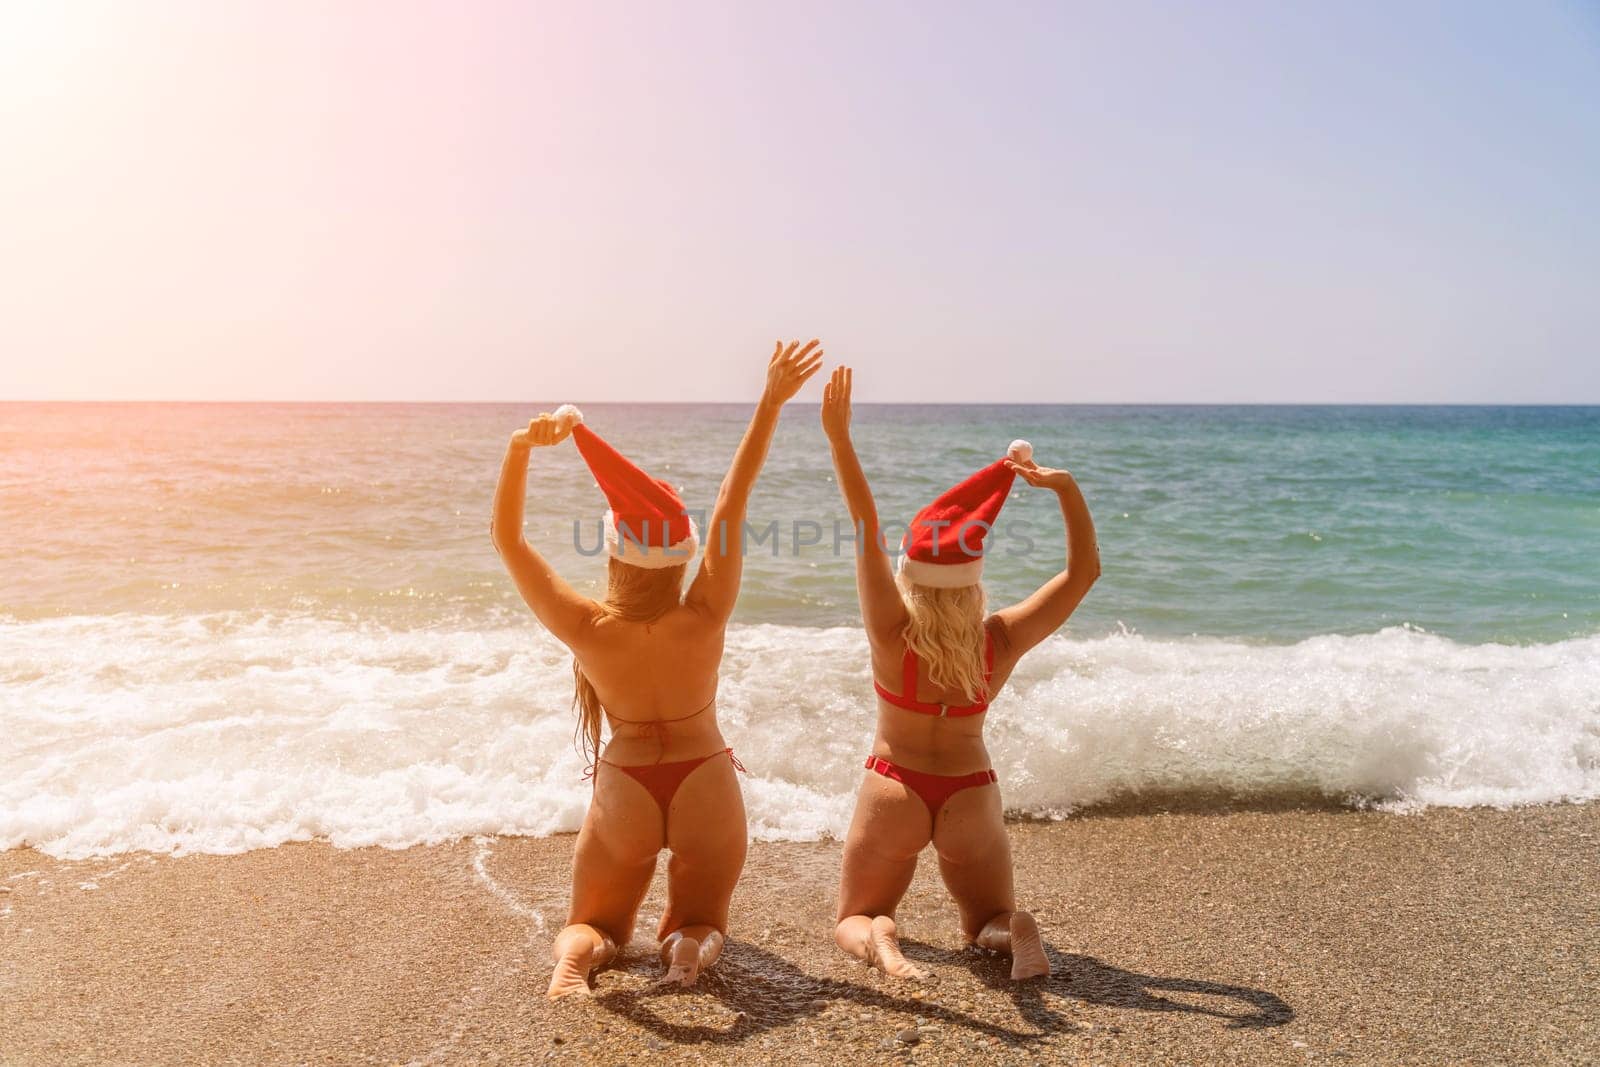 Women Santa hats ocean play. Seaside, beach daytime, enjoying beach fun. Two women in red swimsuits and Santa hats are enjoying themselves in the ocean, kneeling in the waves and raising their hands up. by Matiunina